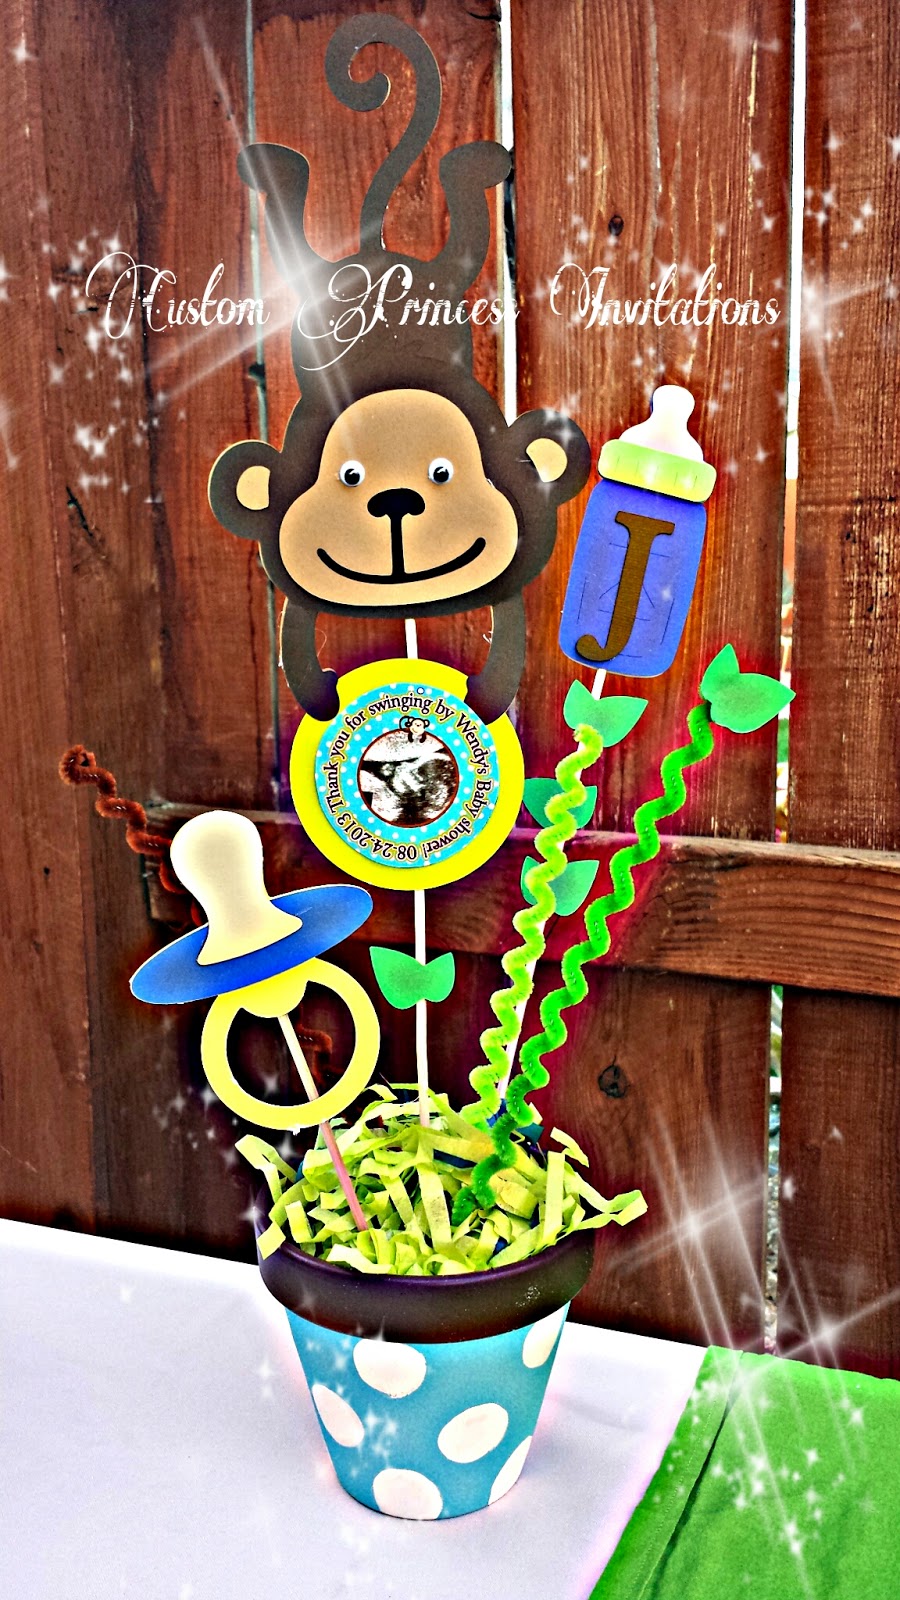 Custom Princess Invitations: Monkey Baby Shower Theme set ...